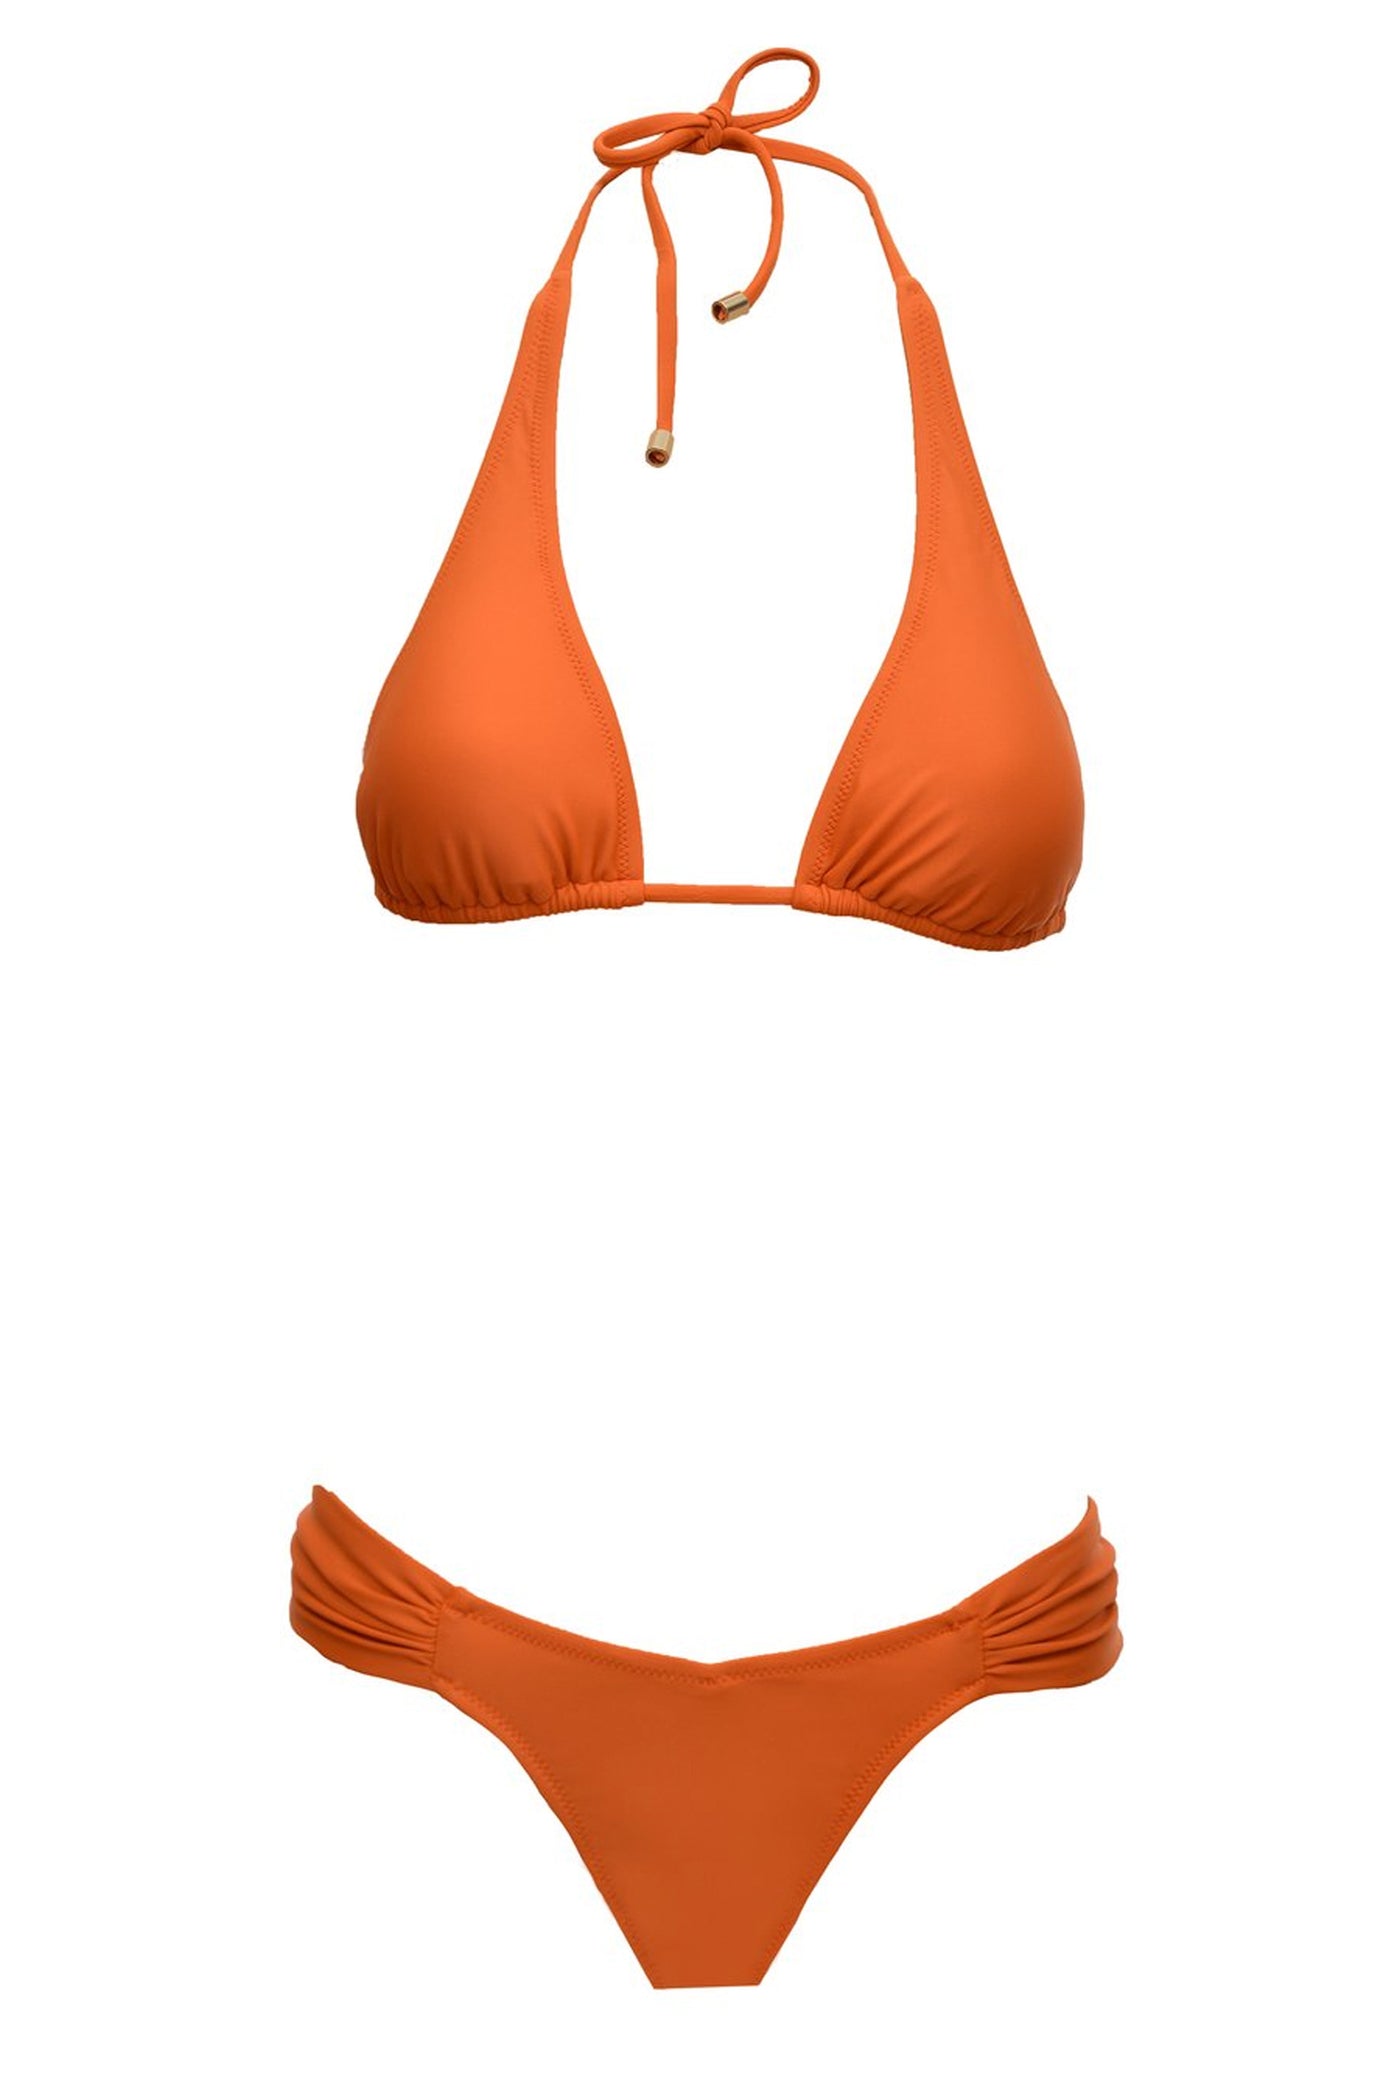 Luna Triangle Bikini in Tangerine